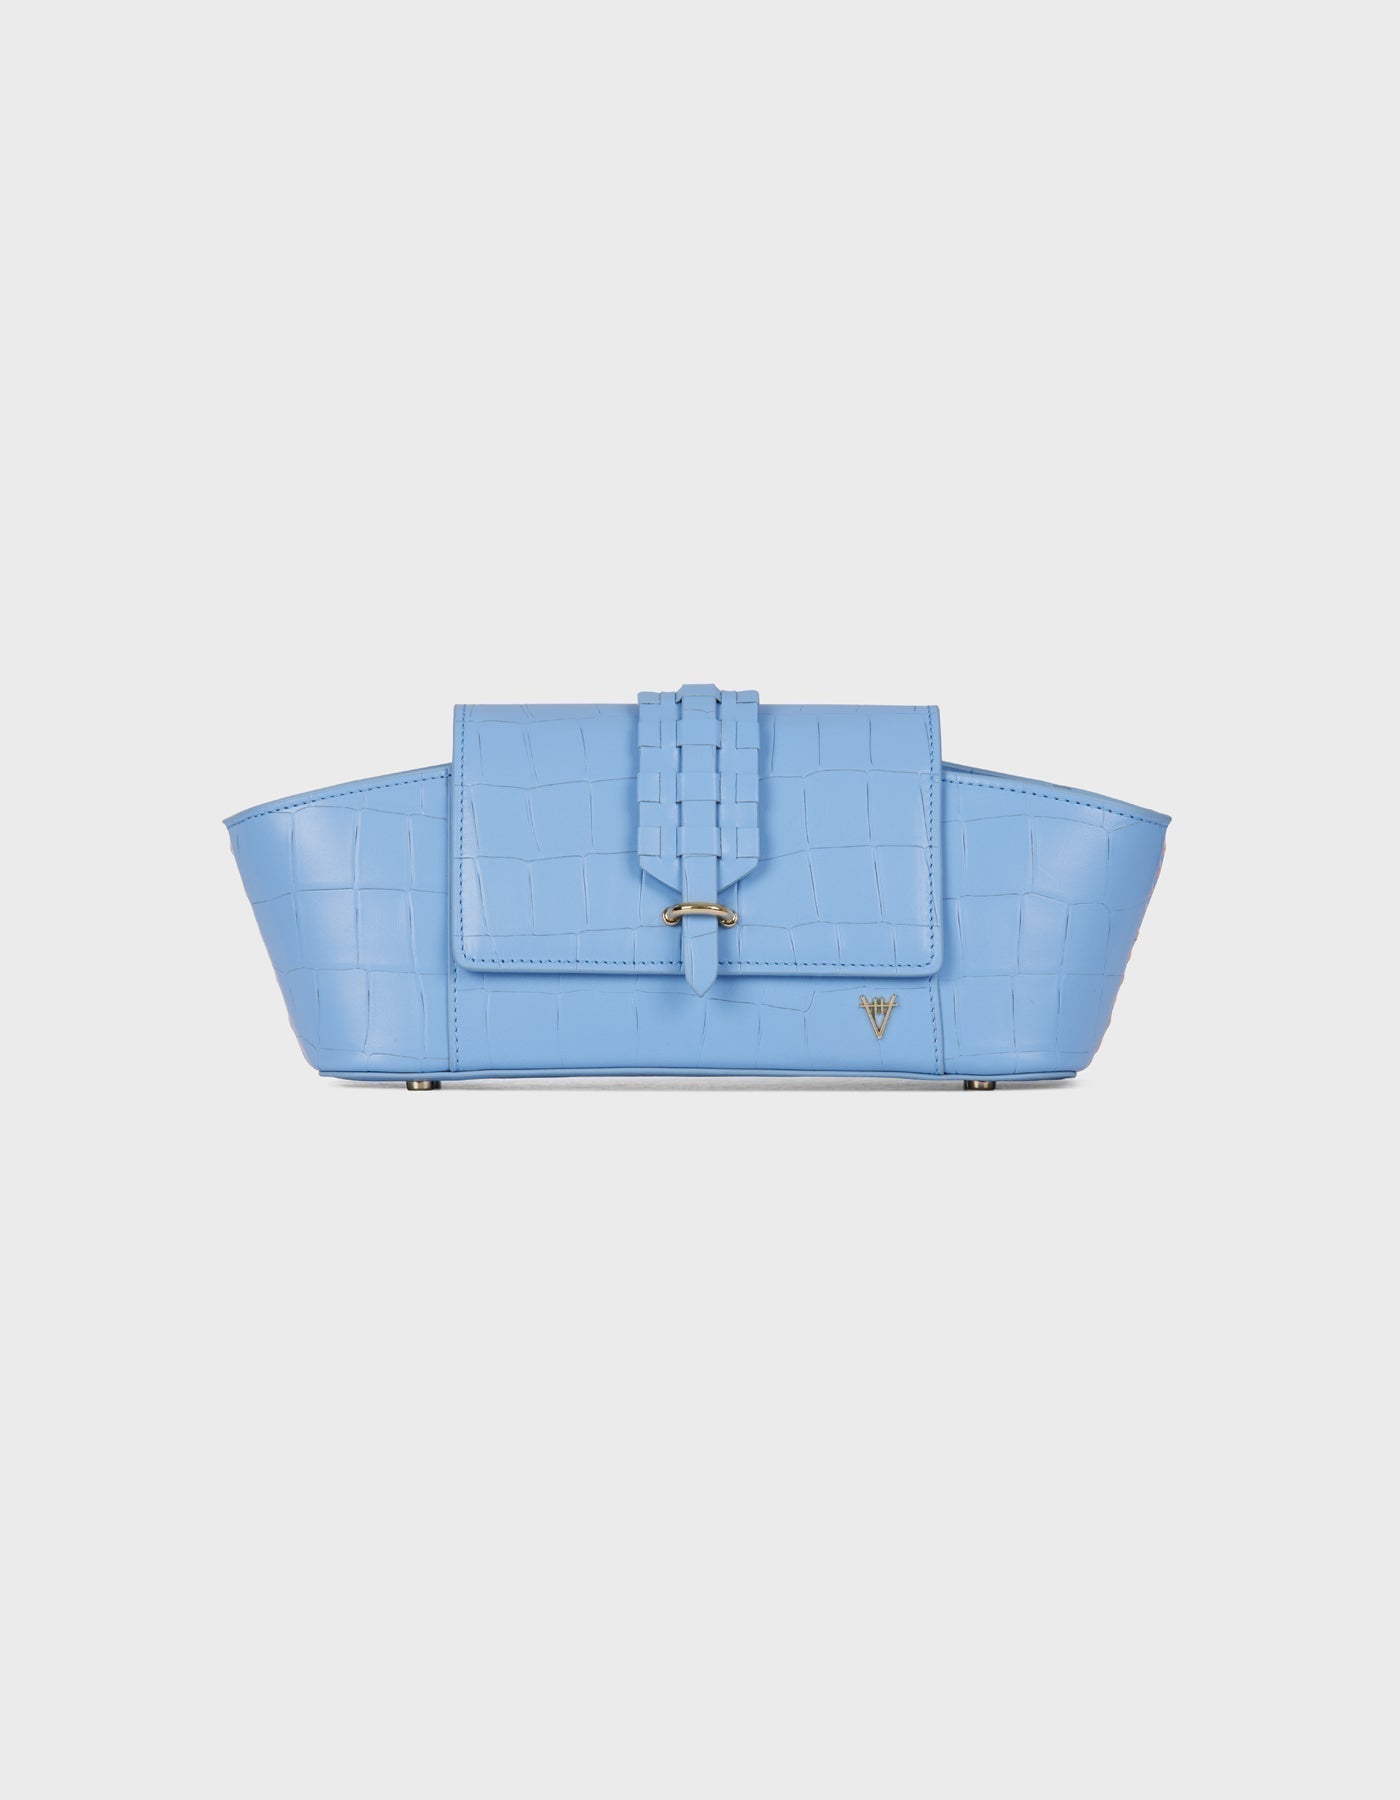 HiVa Atelier | Navis Shoulder Bag Tranquil Blue | Beautiful and Versatile